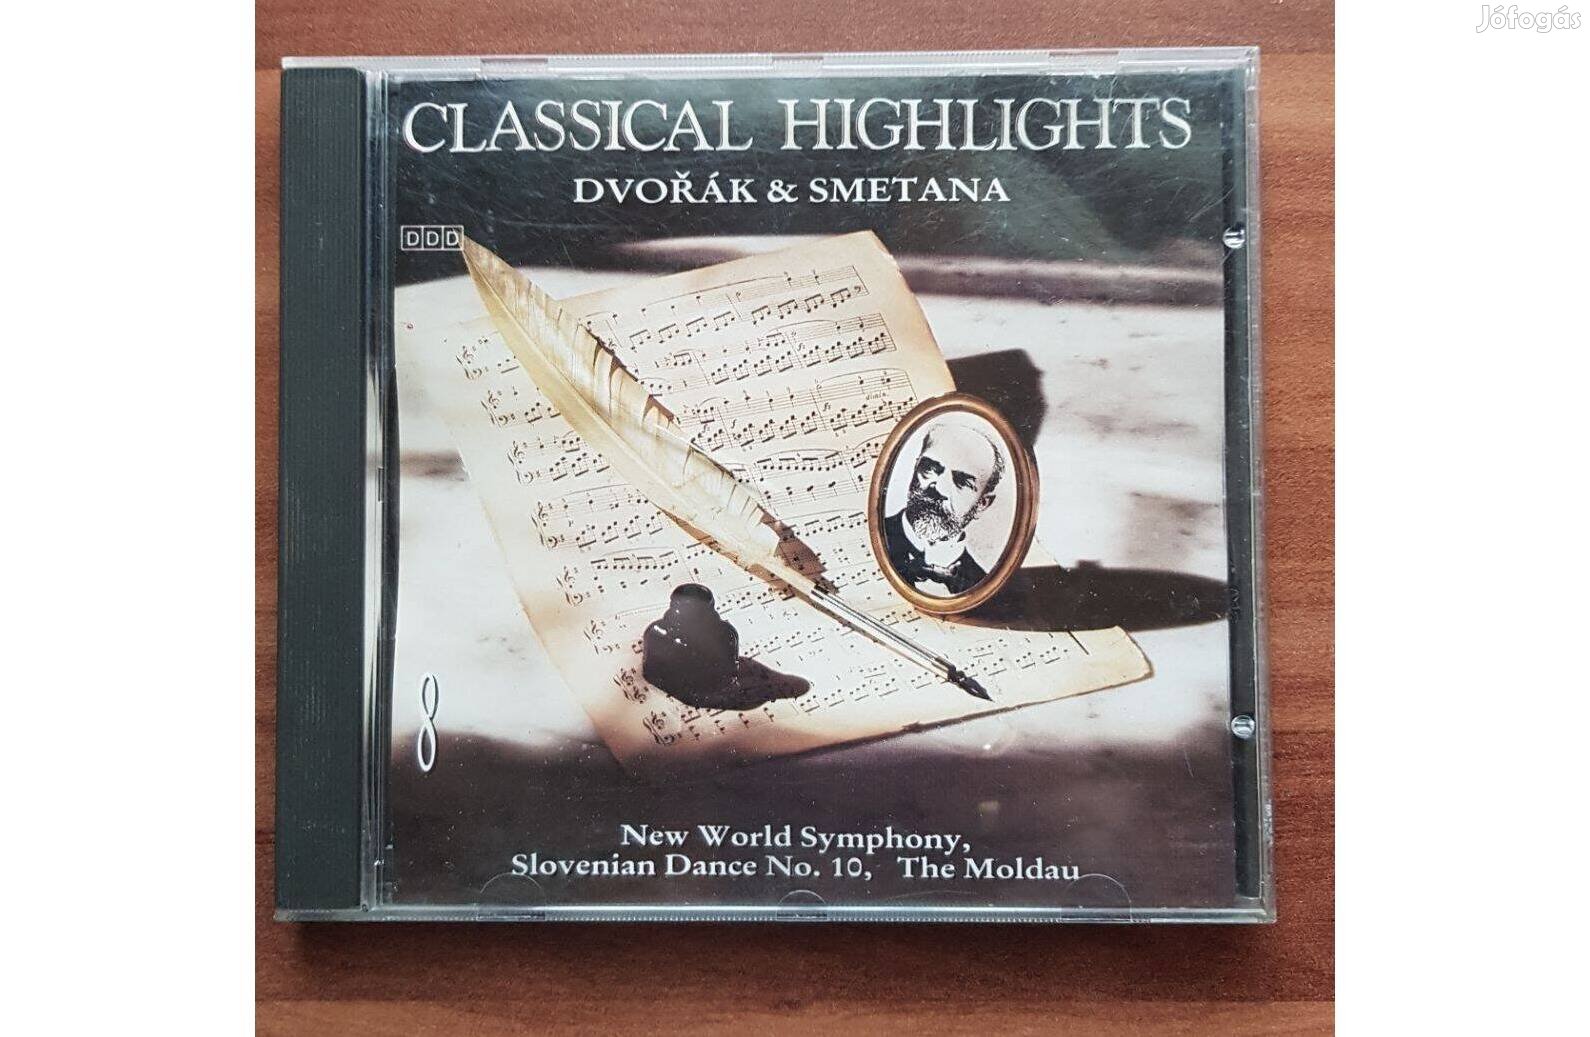 Dvořák & Smetana - Classical Highlights Dvořák & Smetana CD